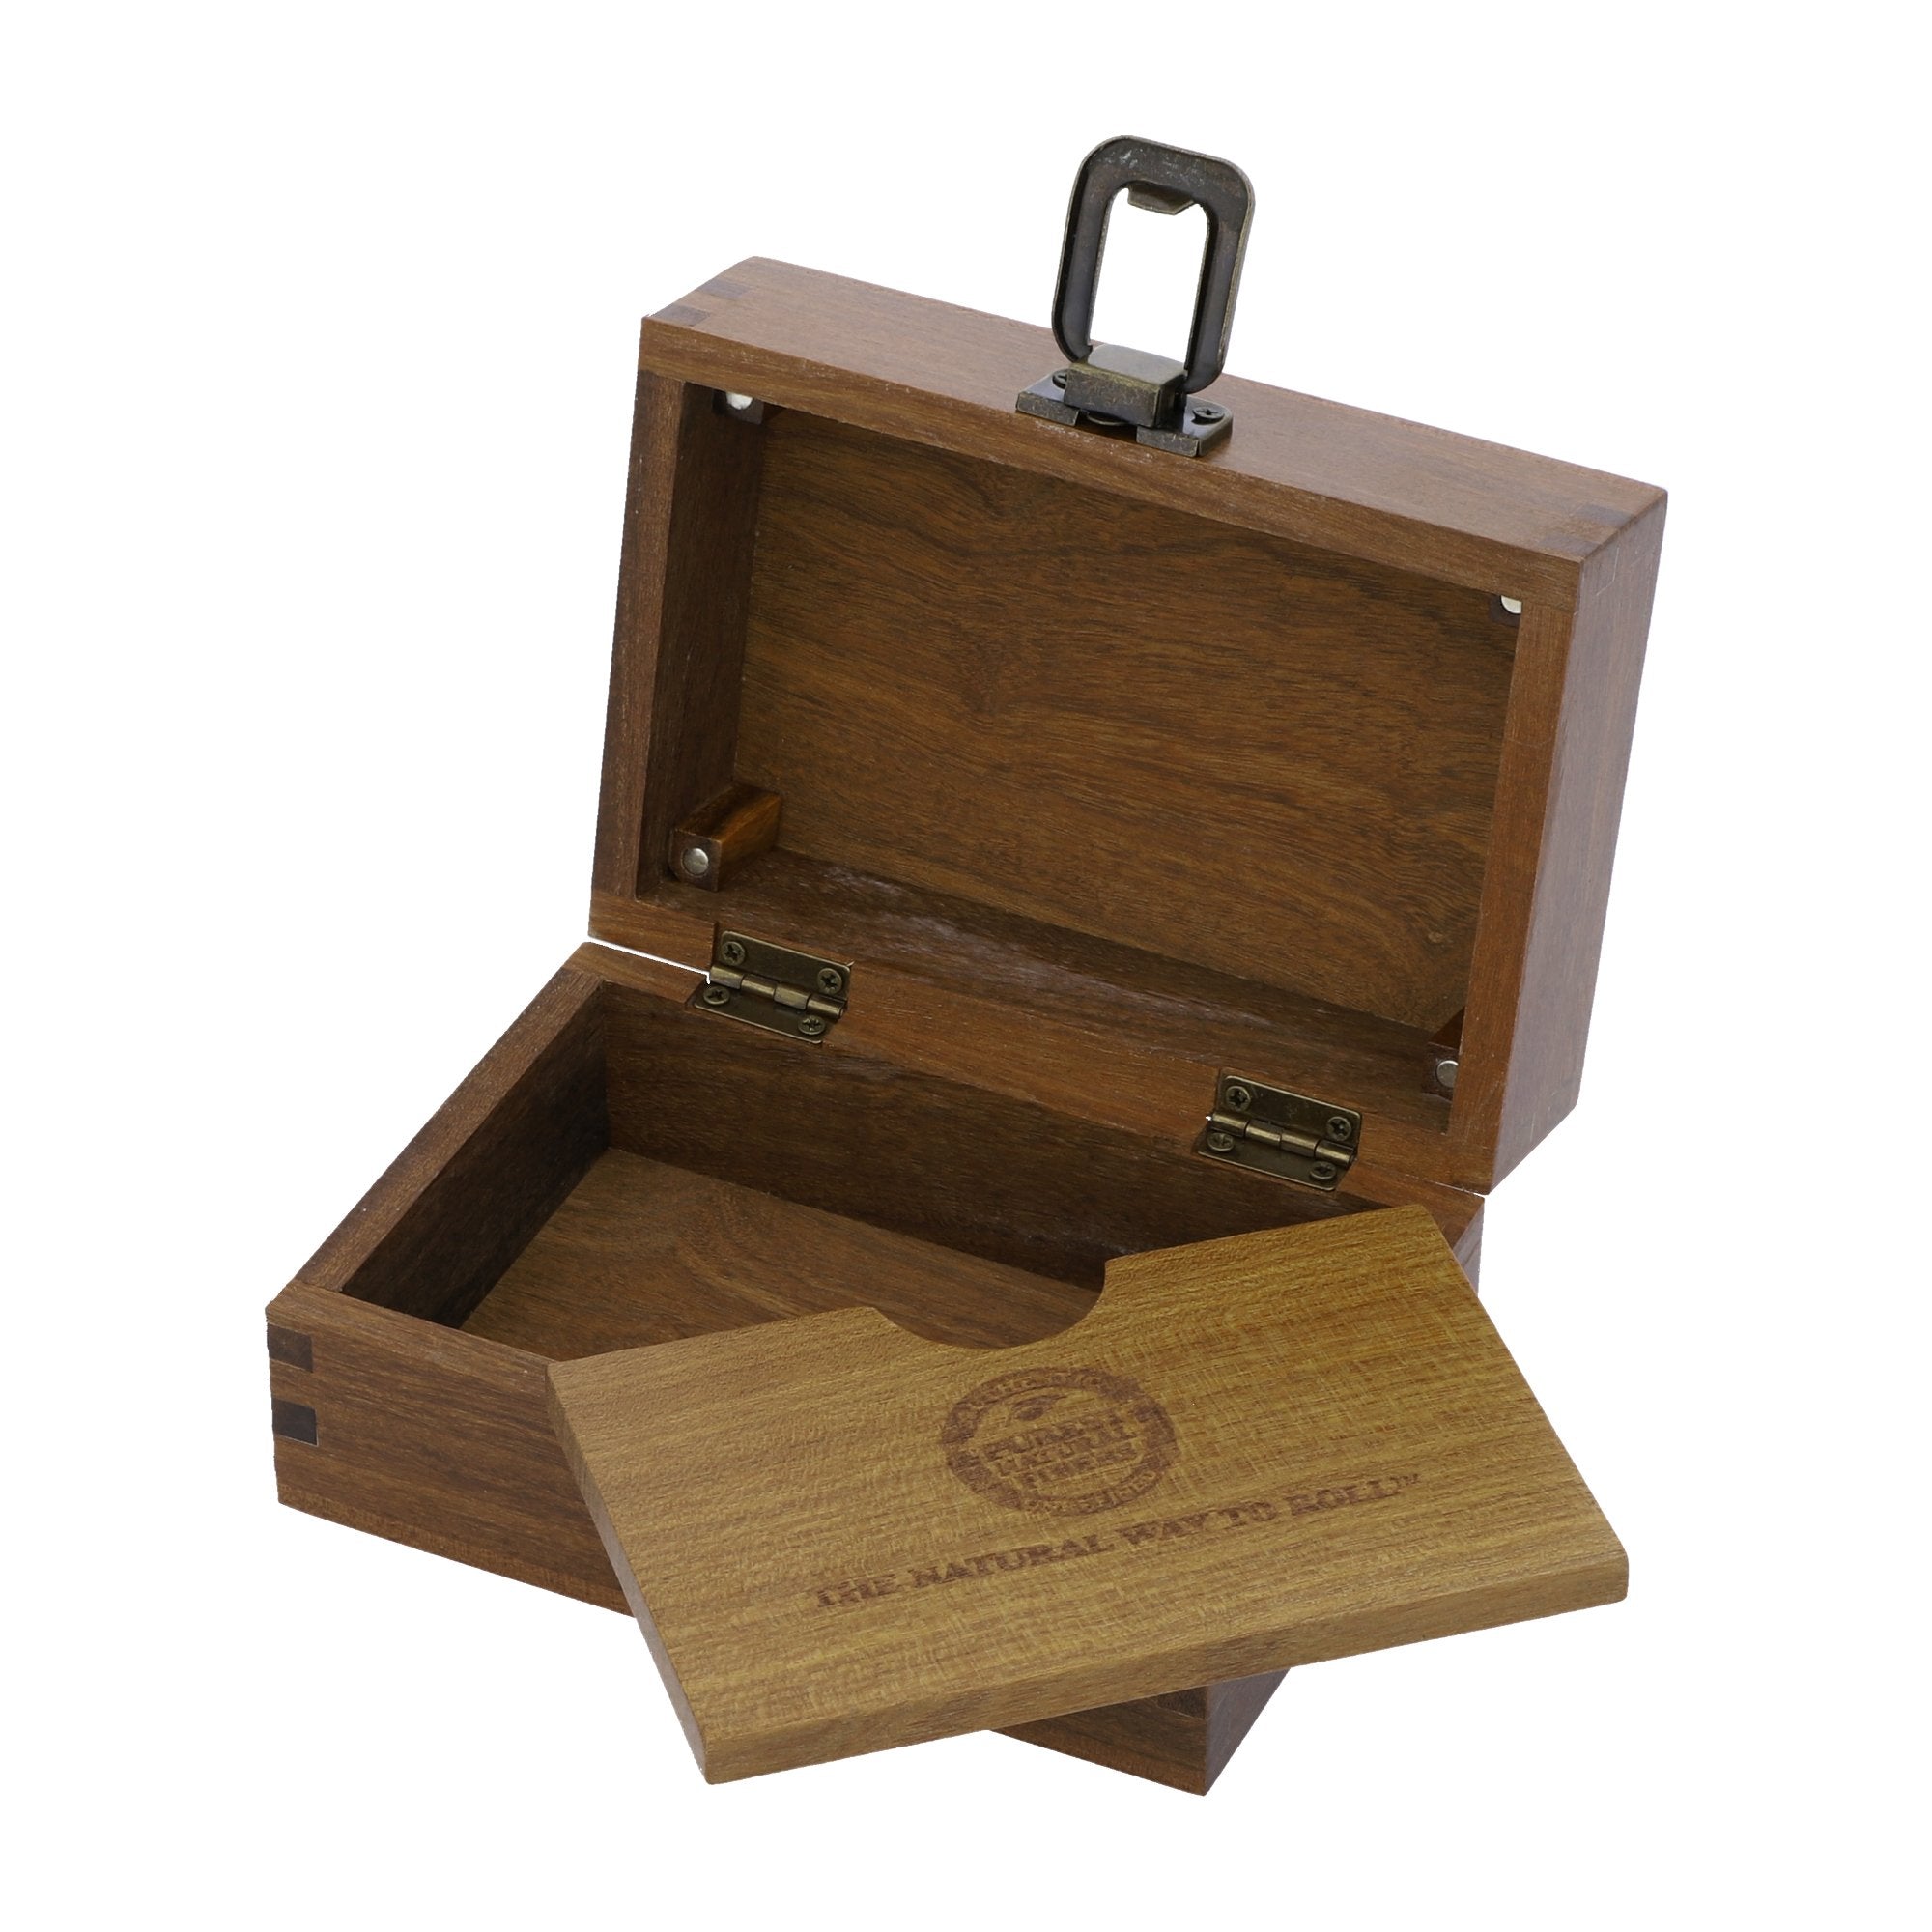 Stash Box  Classic Wood Box (RAW)